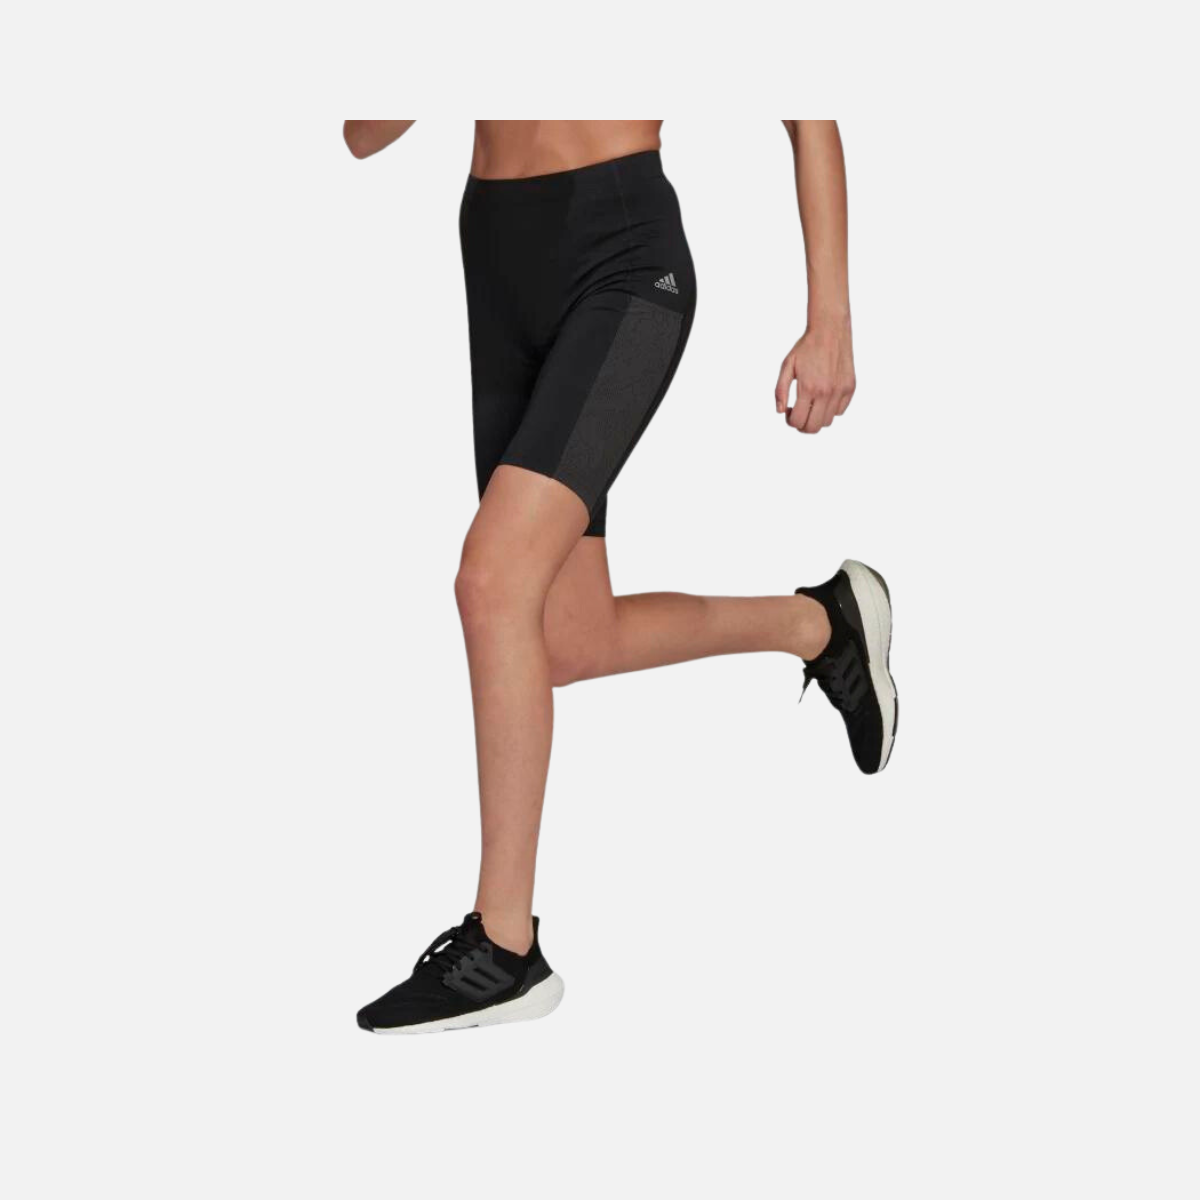 Adidas FastImpact Lace Women Running Short Tight -Black